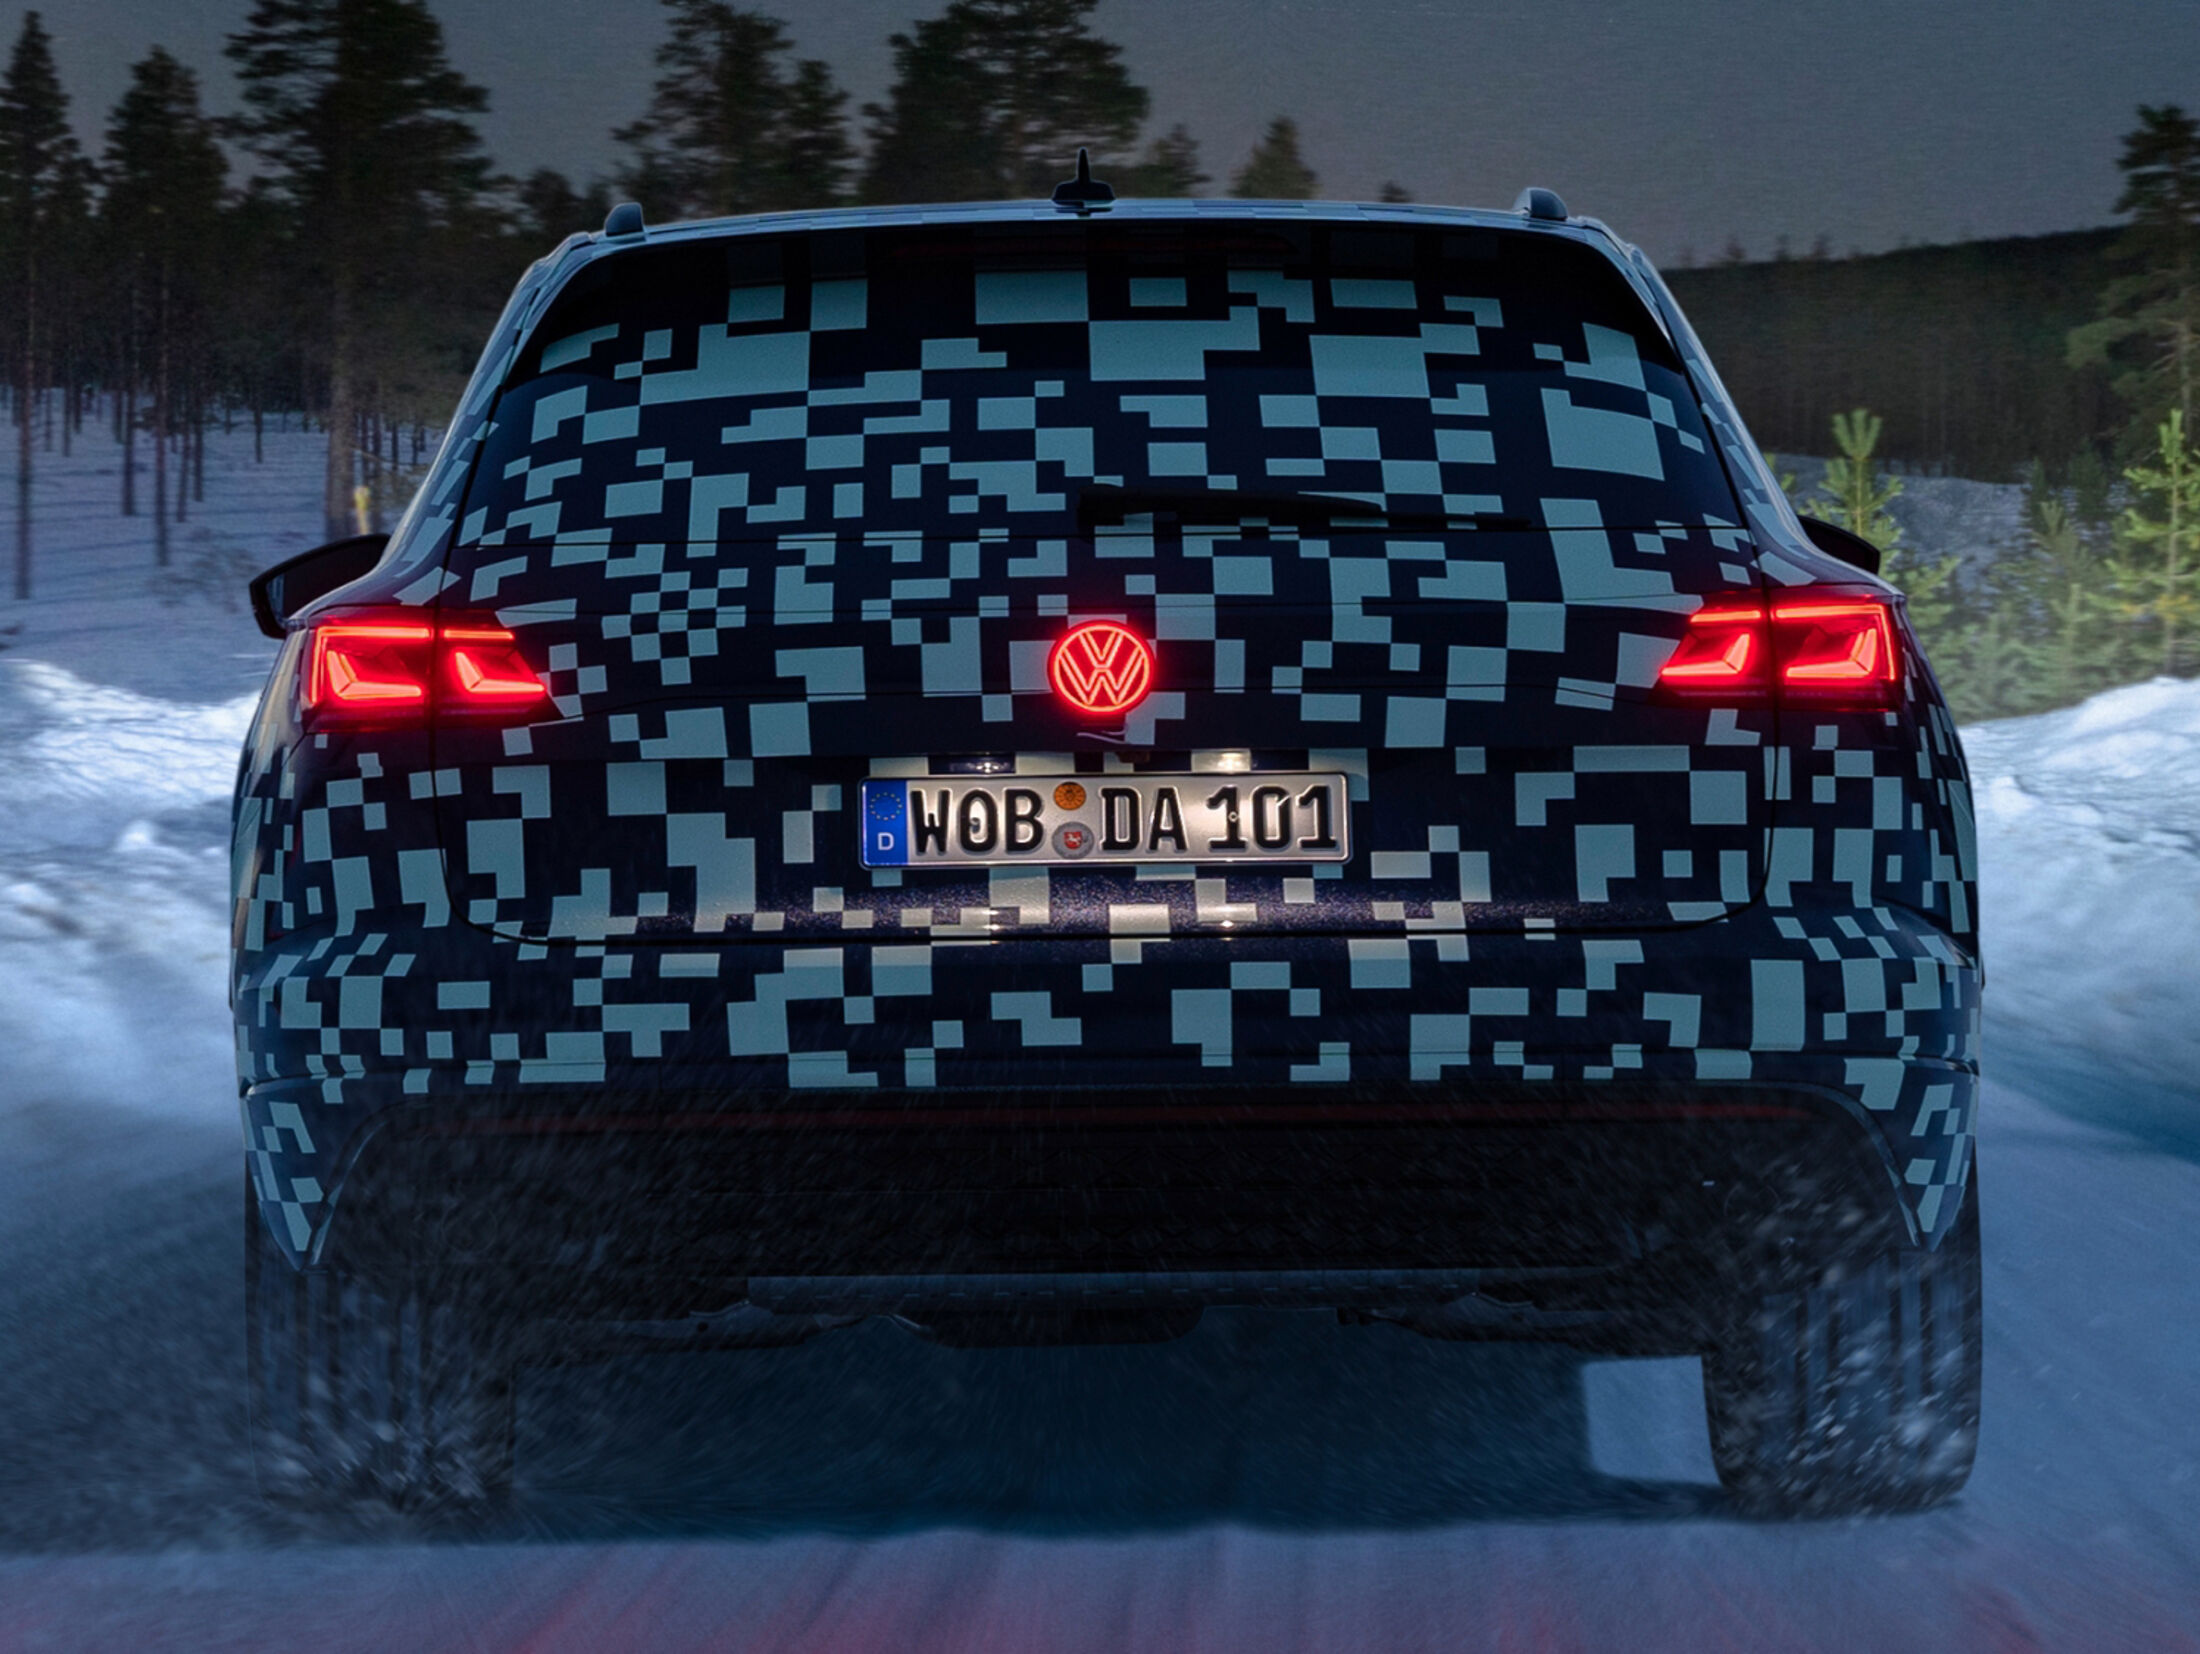 Neuer VW Touareg erhält leuchtende Logos